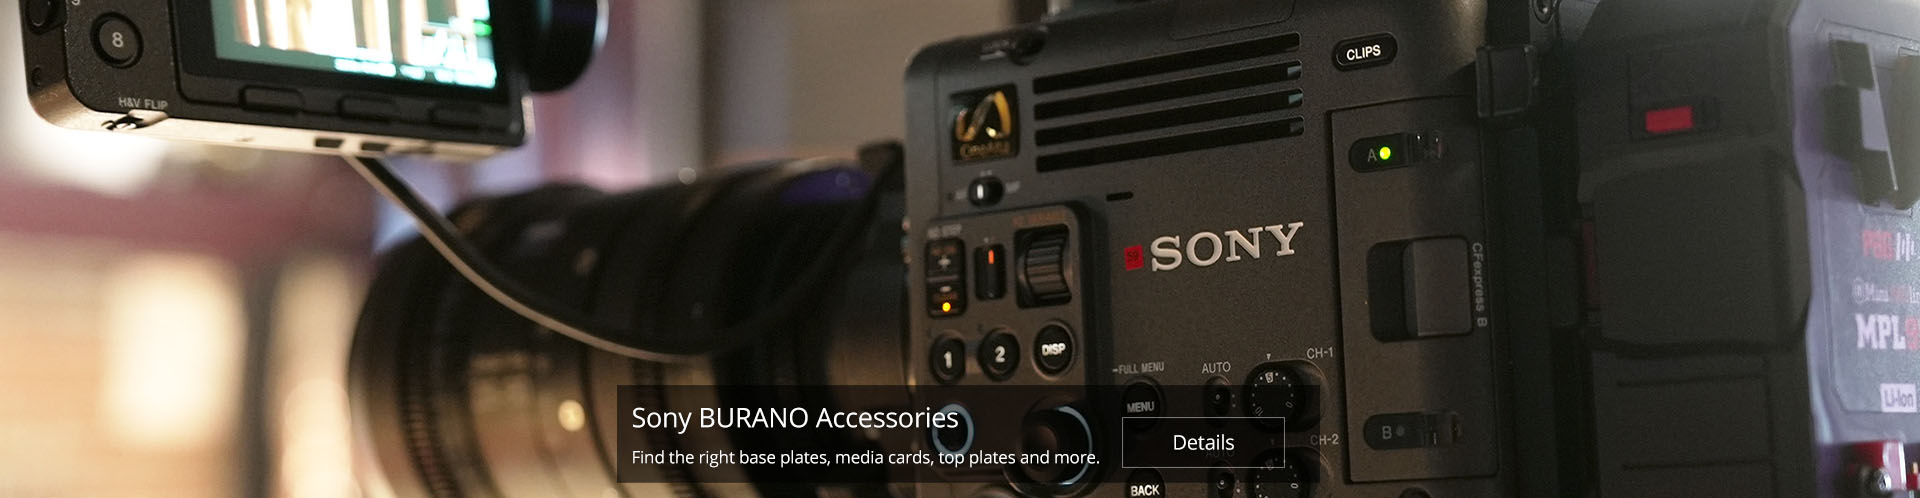 Sony Burano Accessories